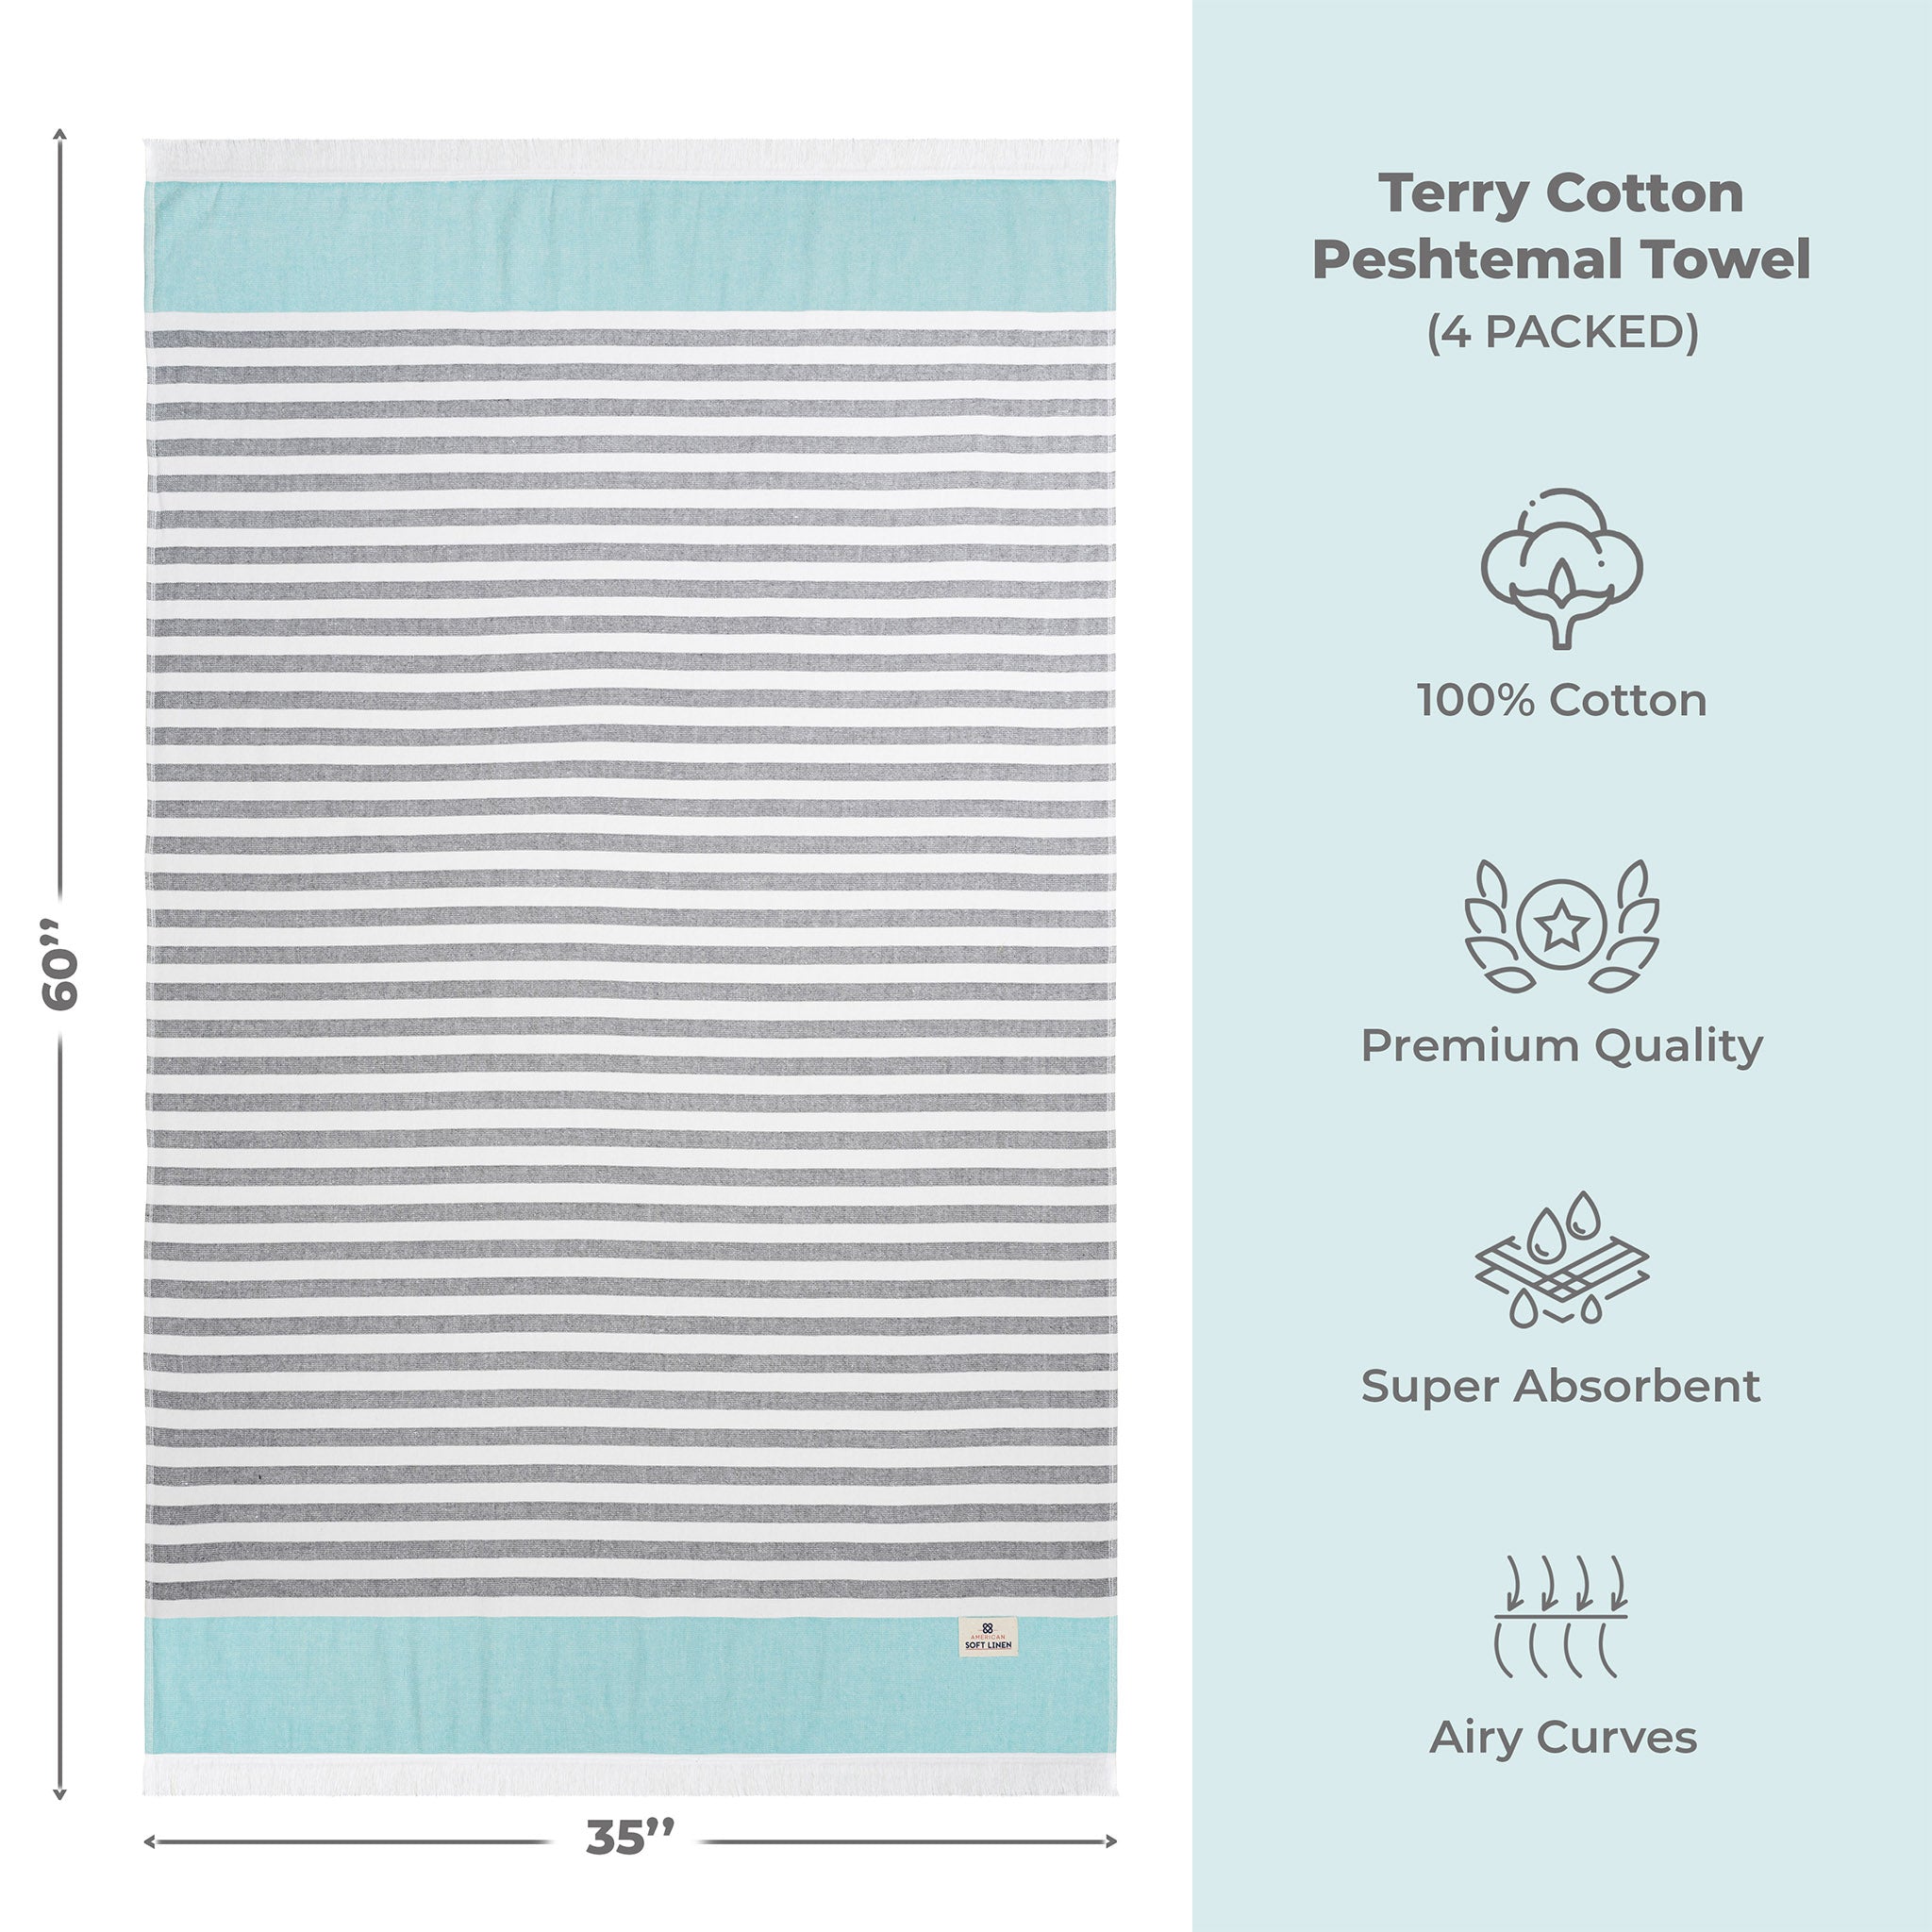 4 Packed 100% Cotton Terry Peshtemal & Beach Towel Sky Blue-03